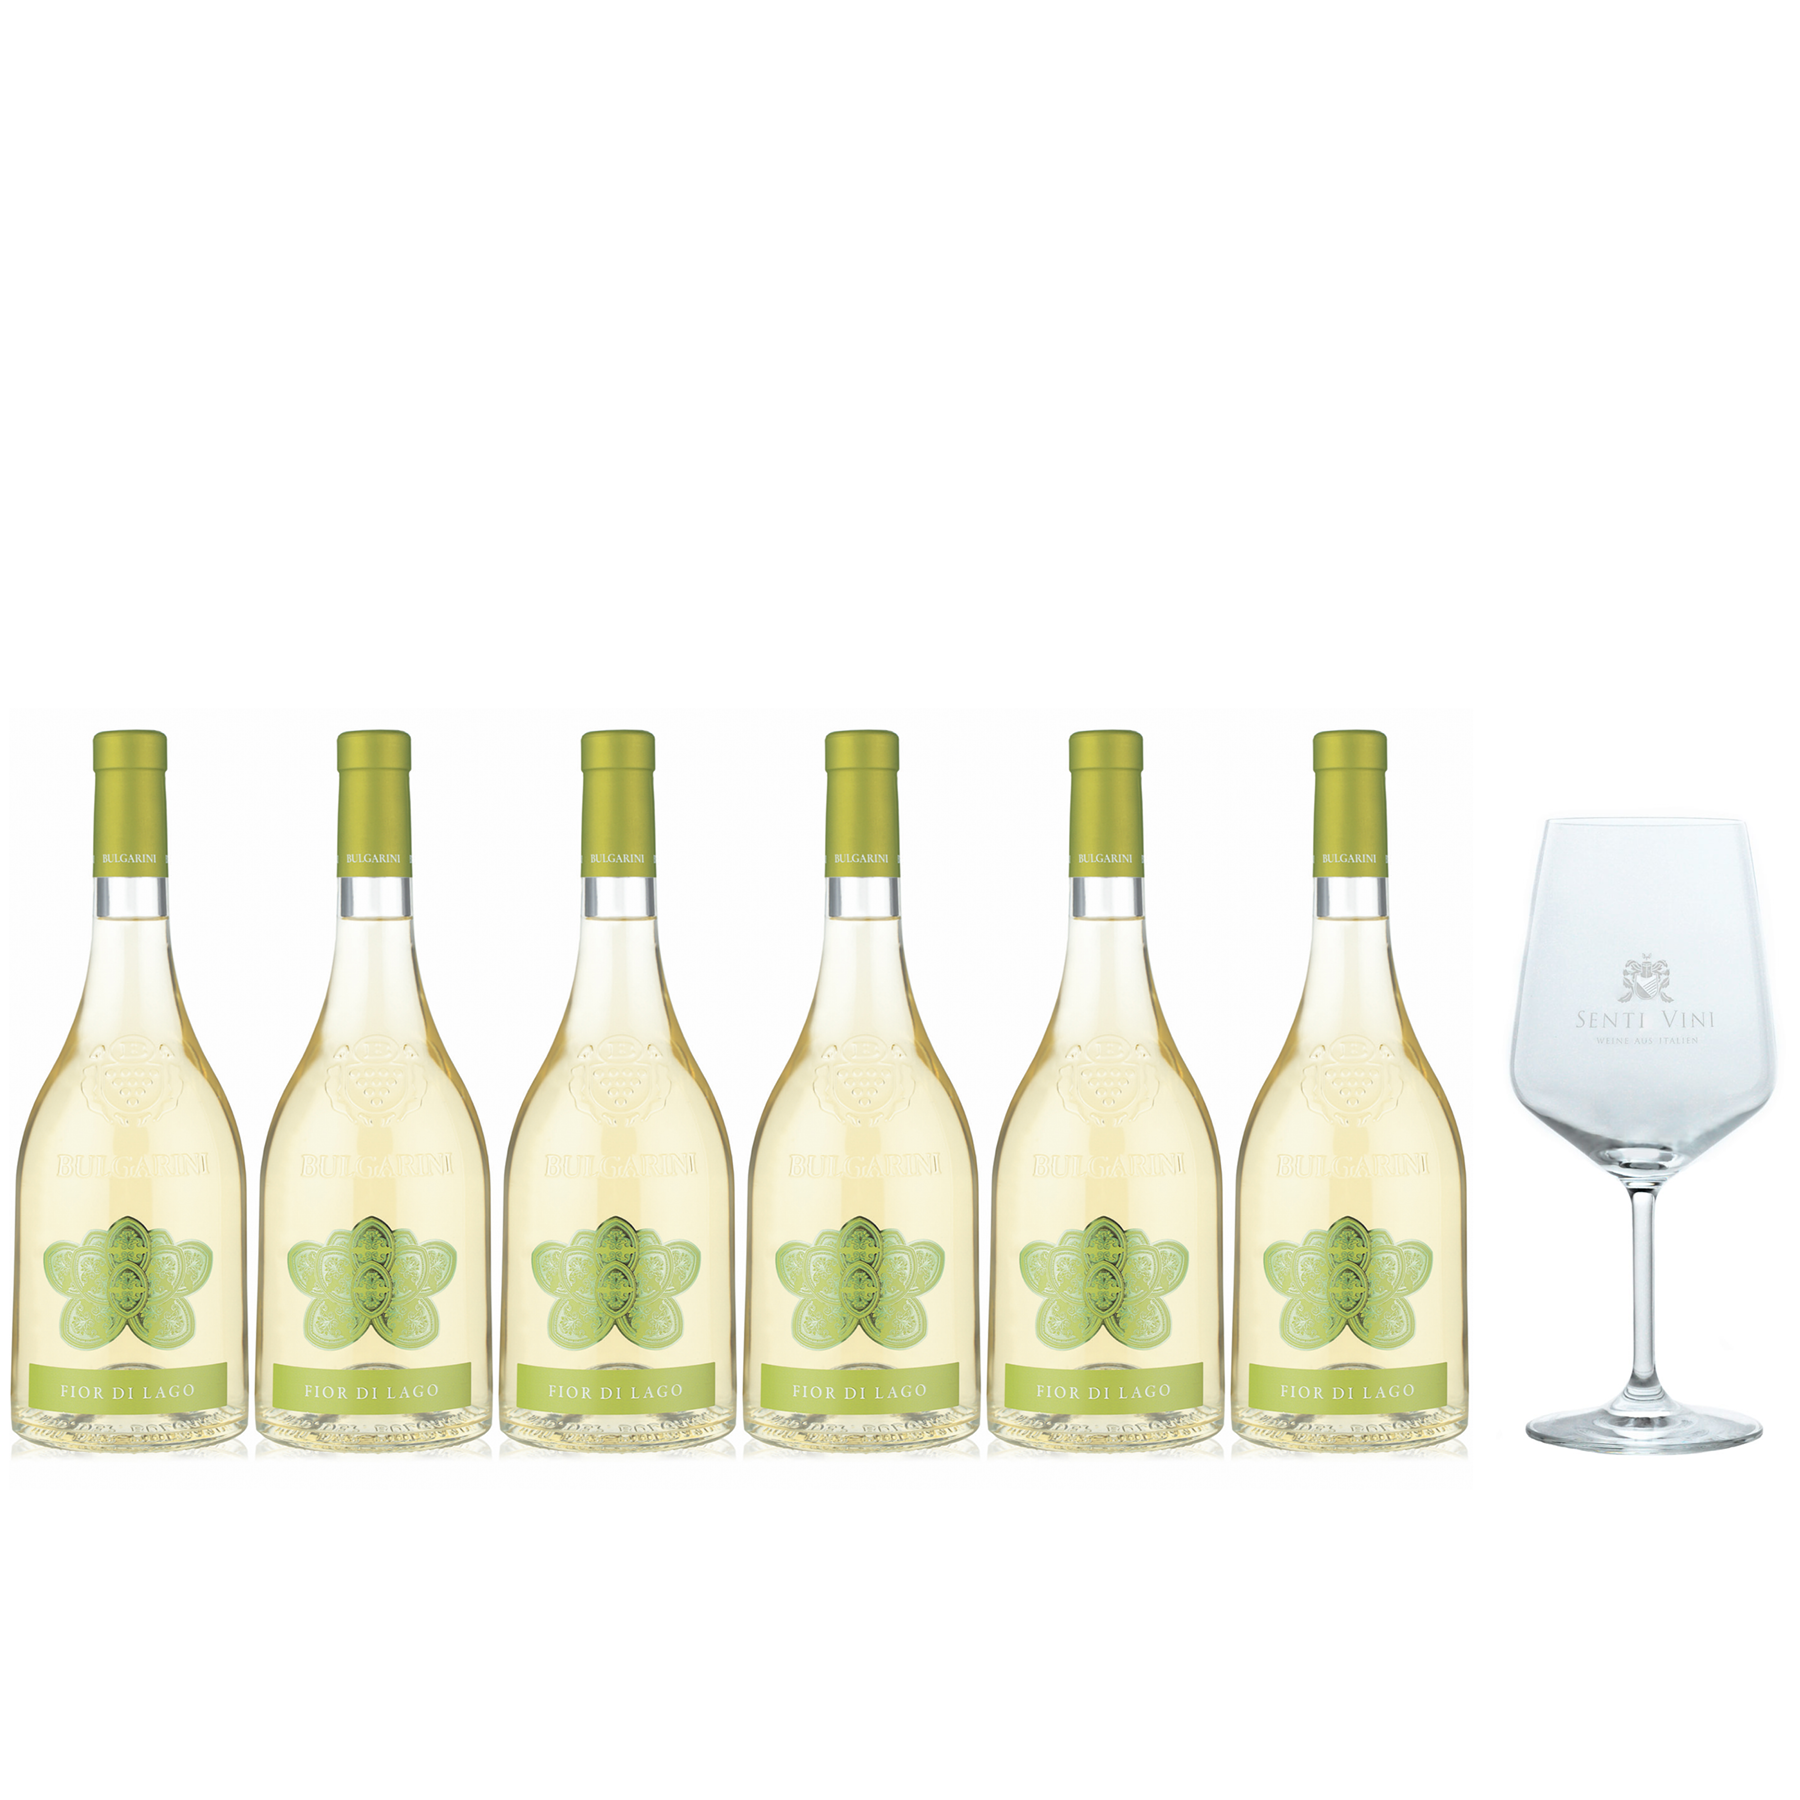 Sparpaket Bulgarini Fior di Lago Vino Bianco 2022 (6 x 0,75l) mit Spiegelau  Senti Vini Weinglas | Online kaufen bei Senti Vini - Weine aus Italien